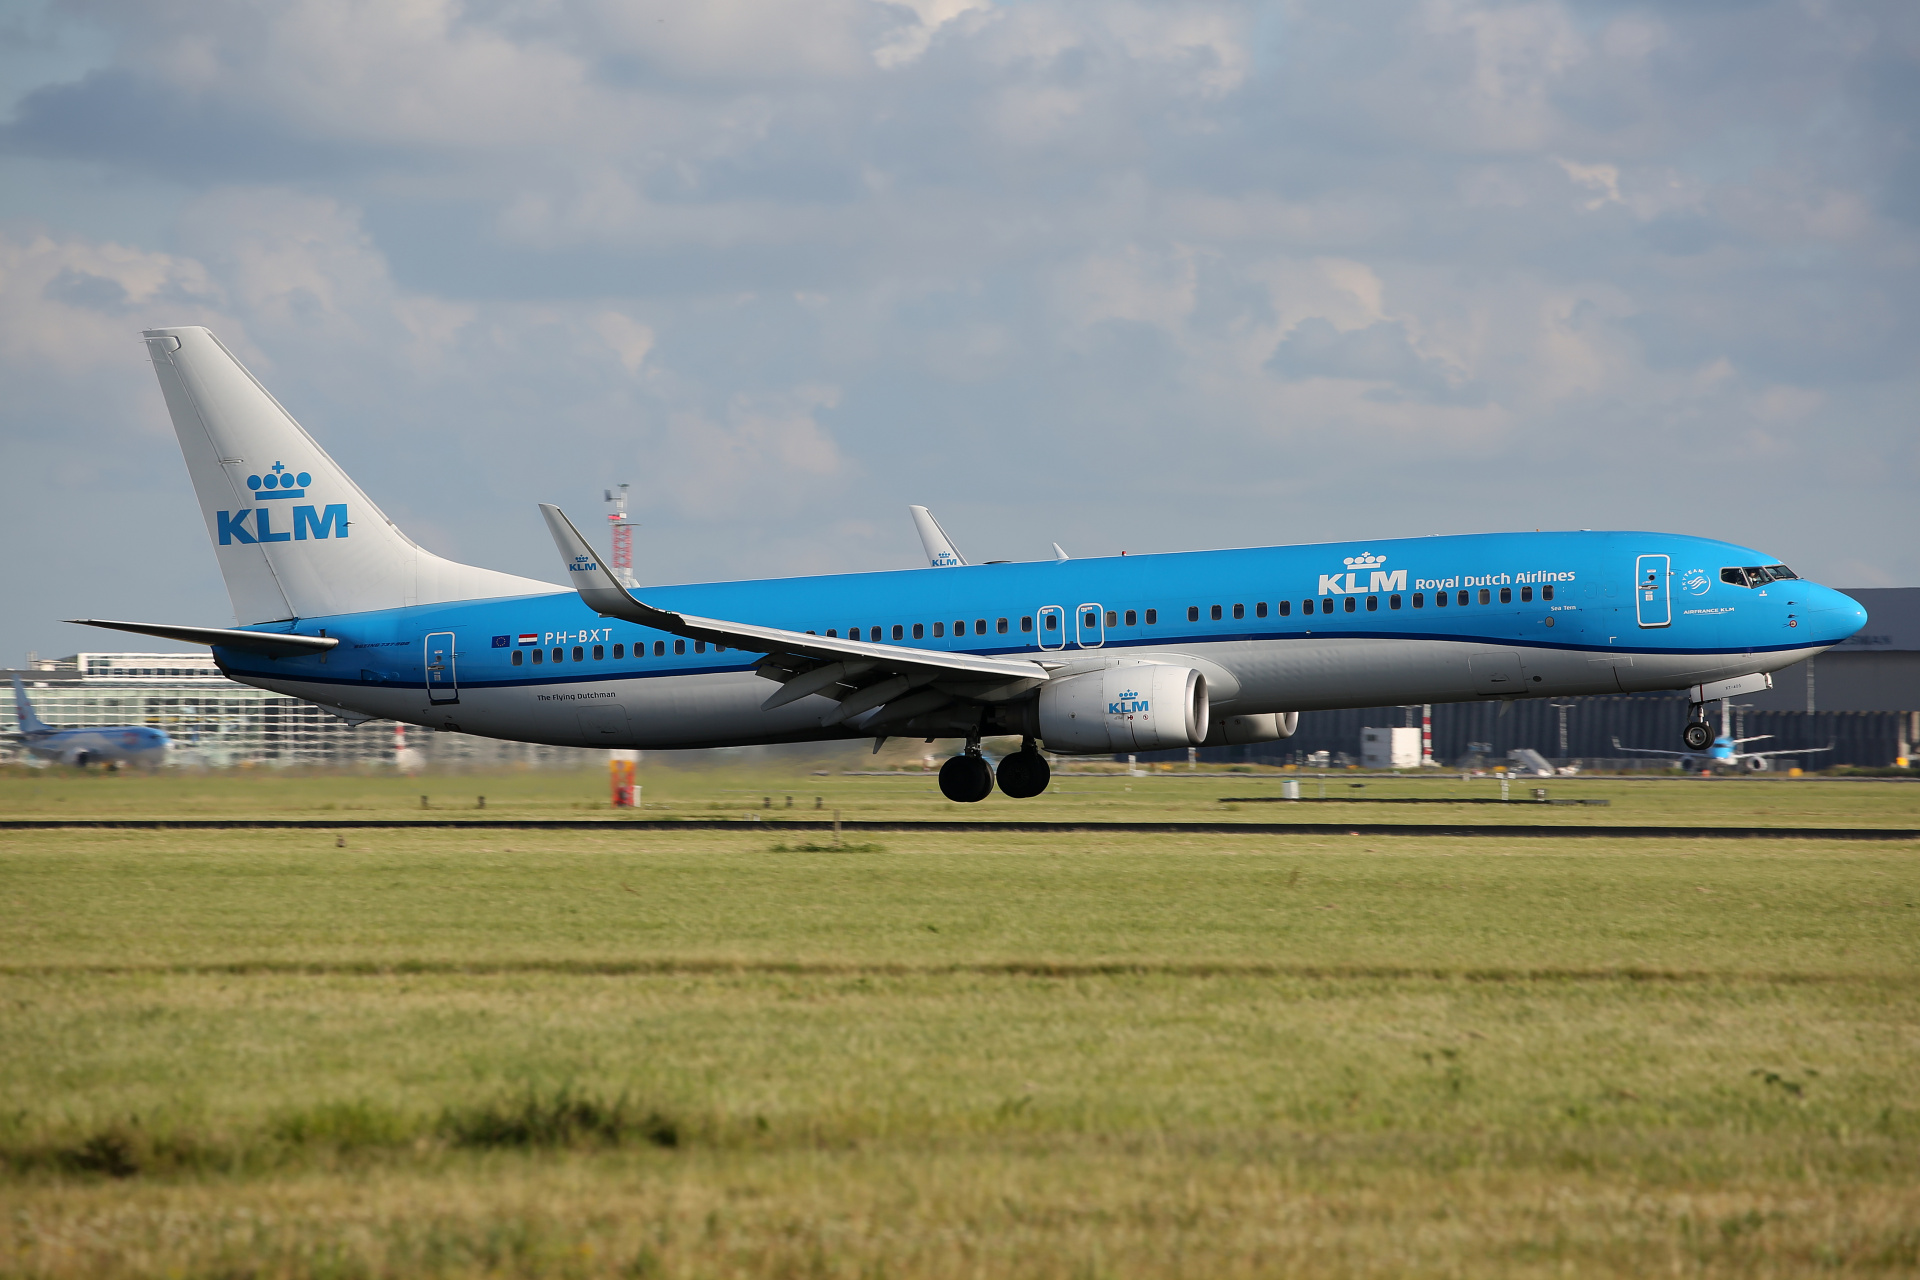 PH-BXT (Aircraft » Schiphol Spotting » Boeing 737-900 » KLM Royal Dutch Airlines)